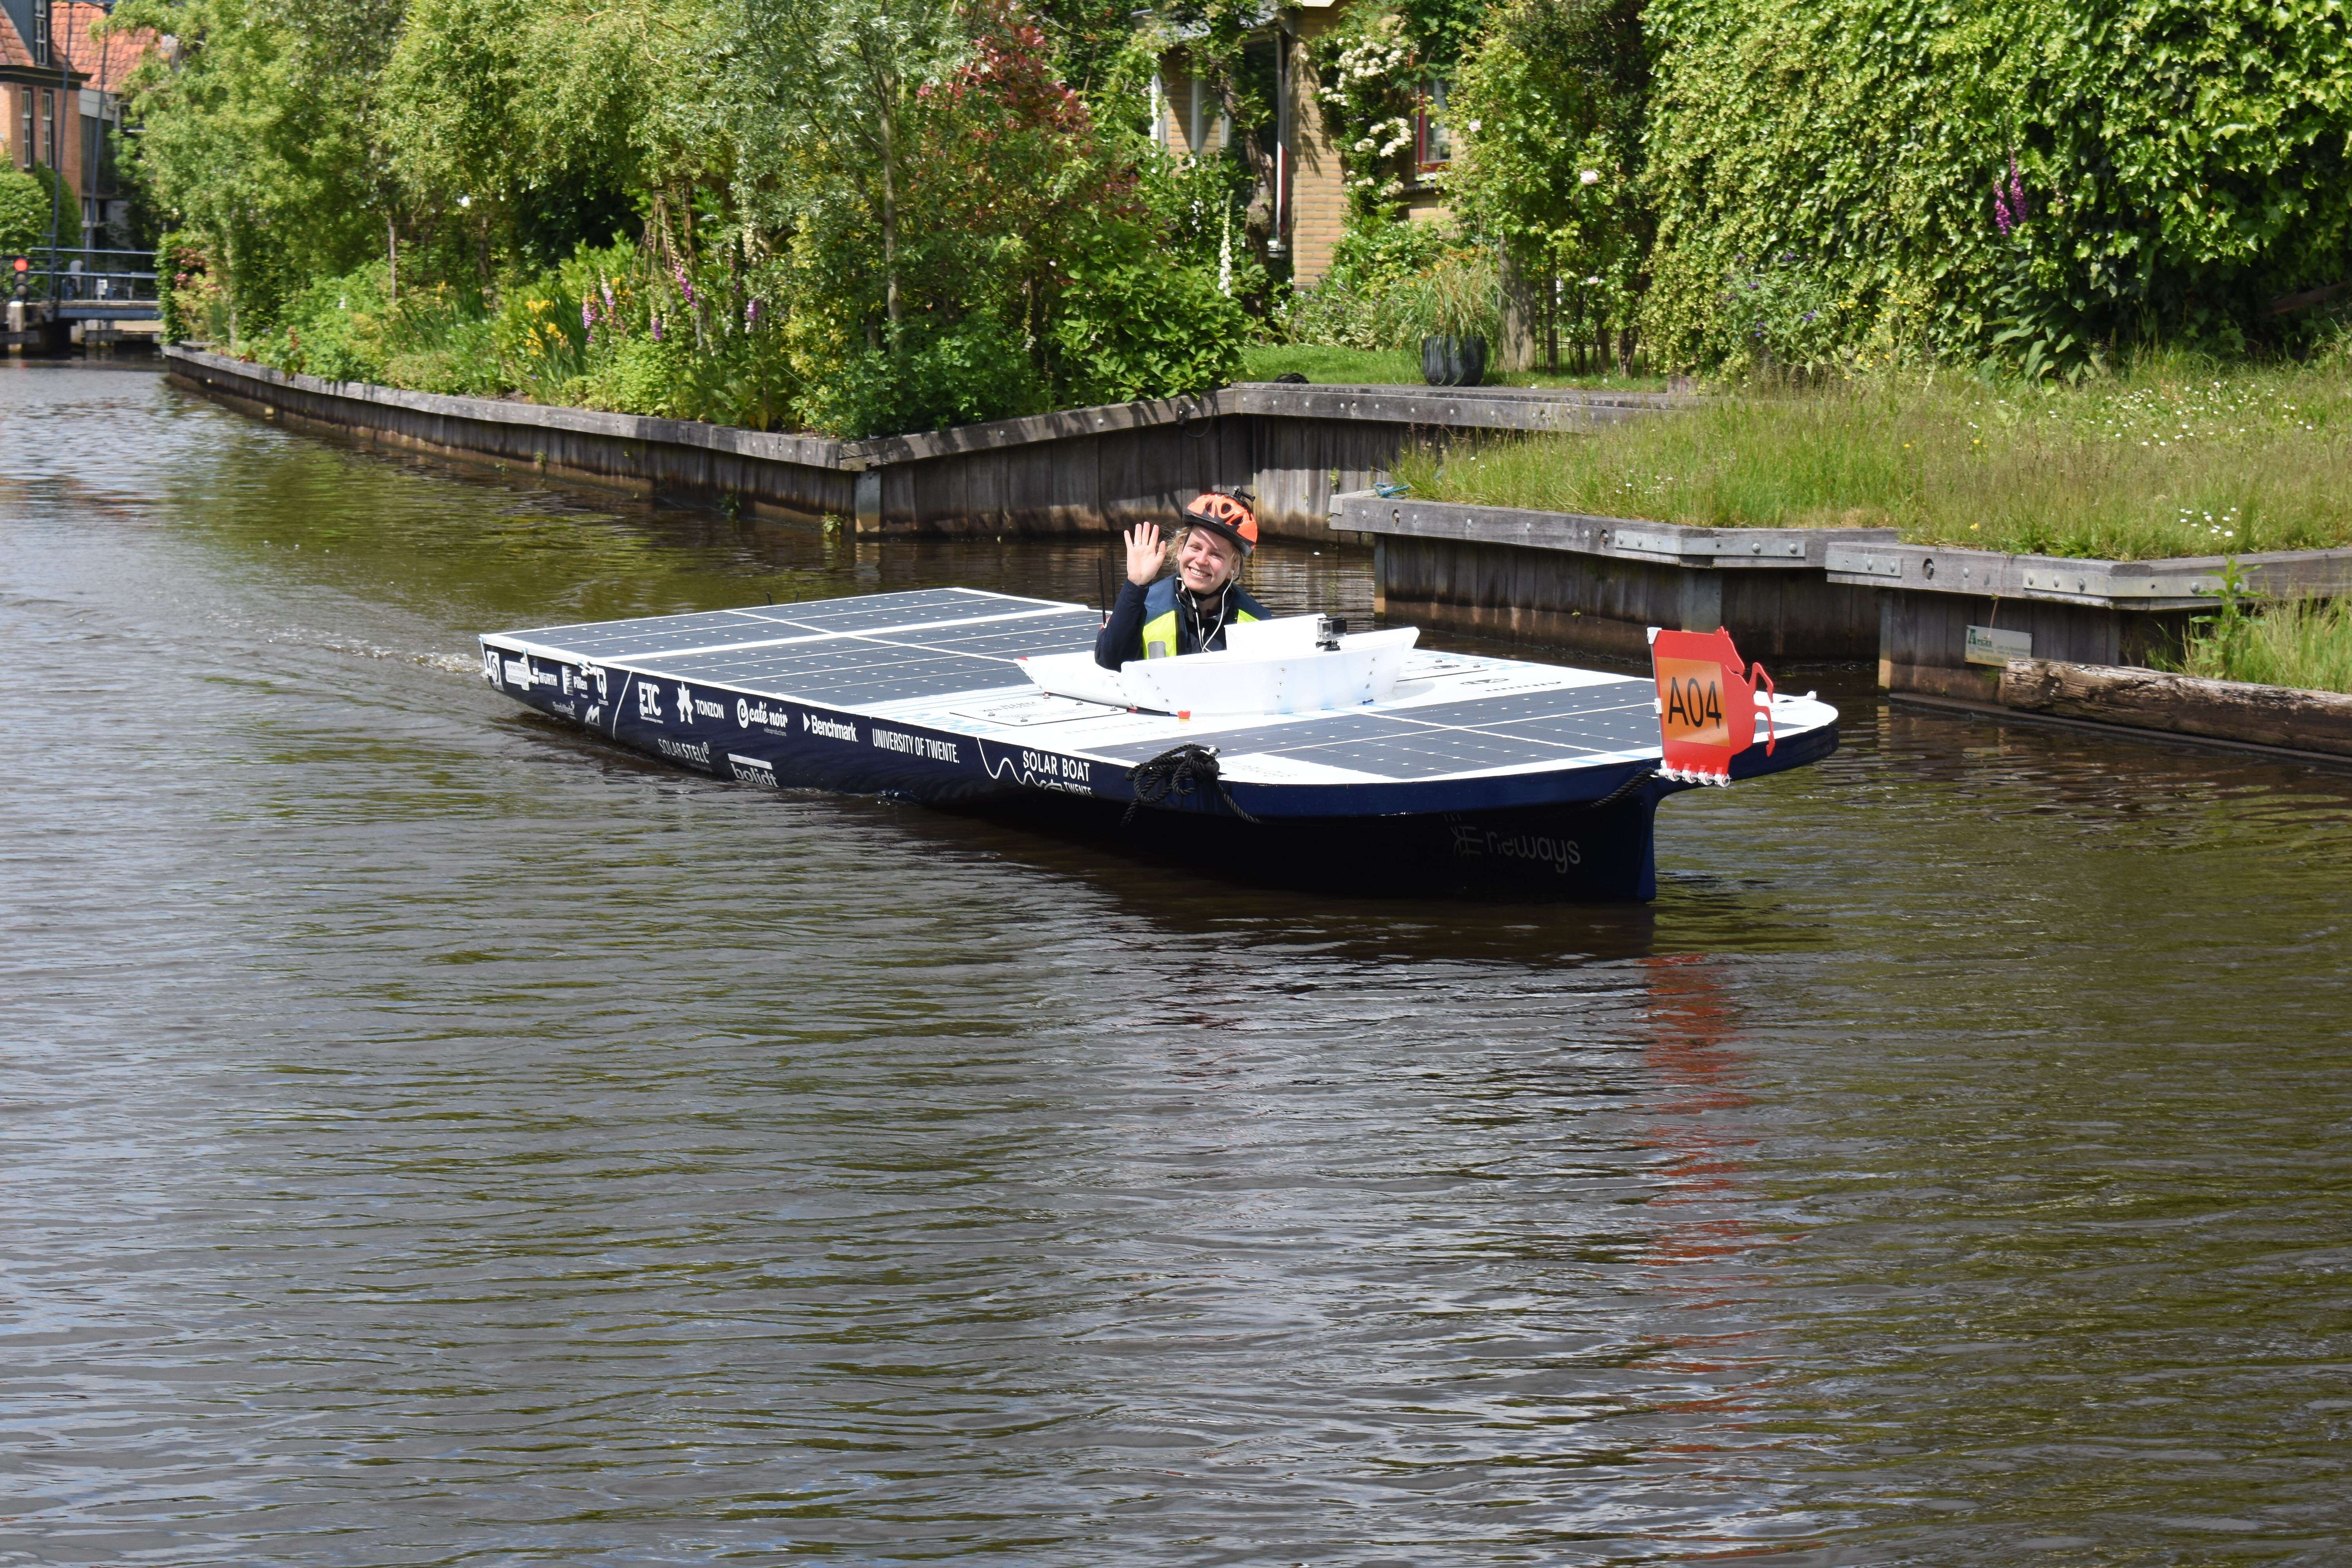 Solar Boat Twente - NK Akkrum